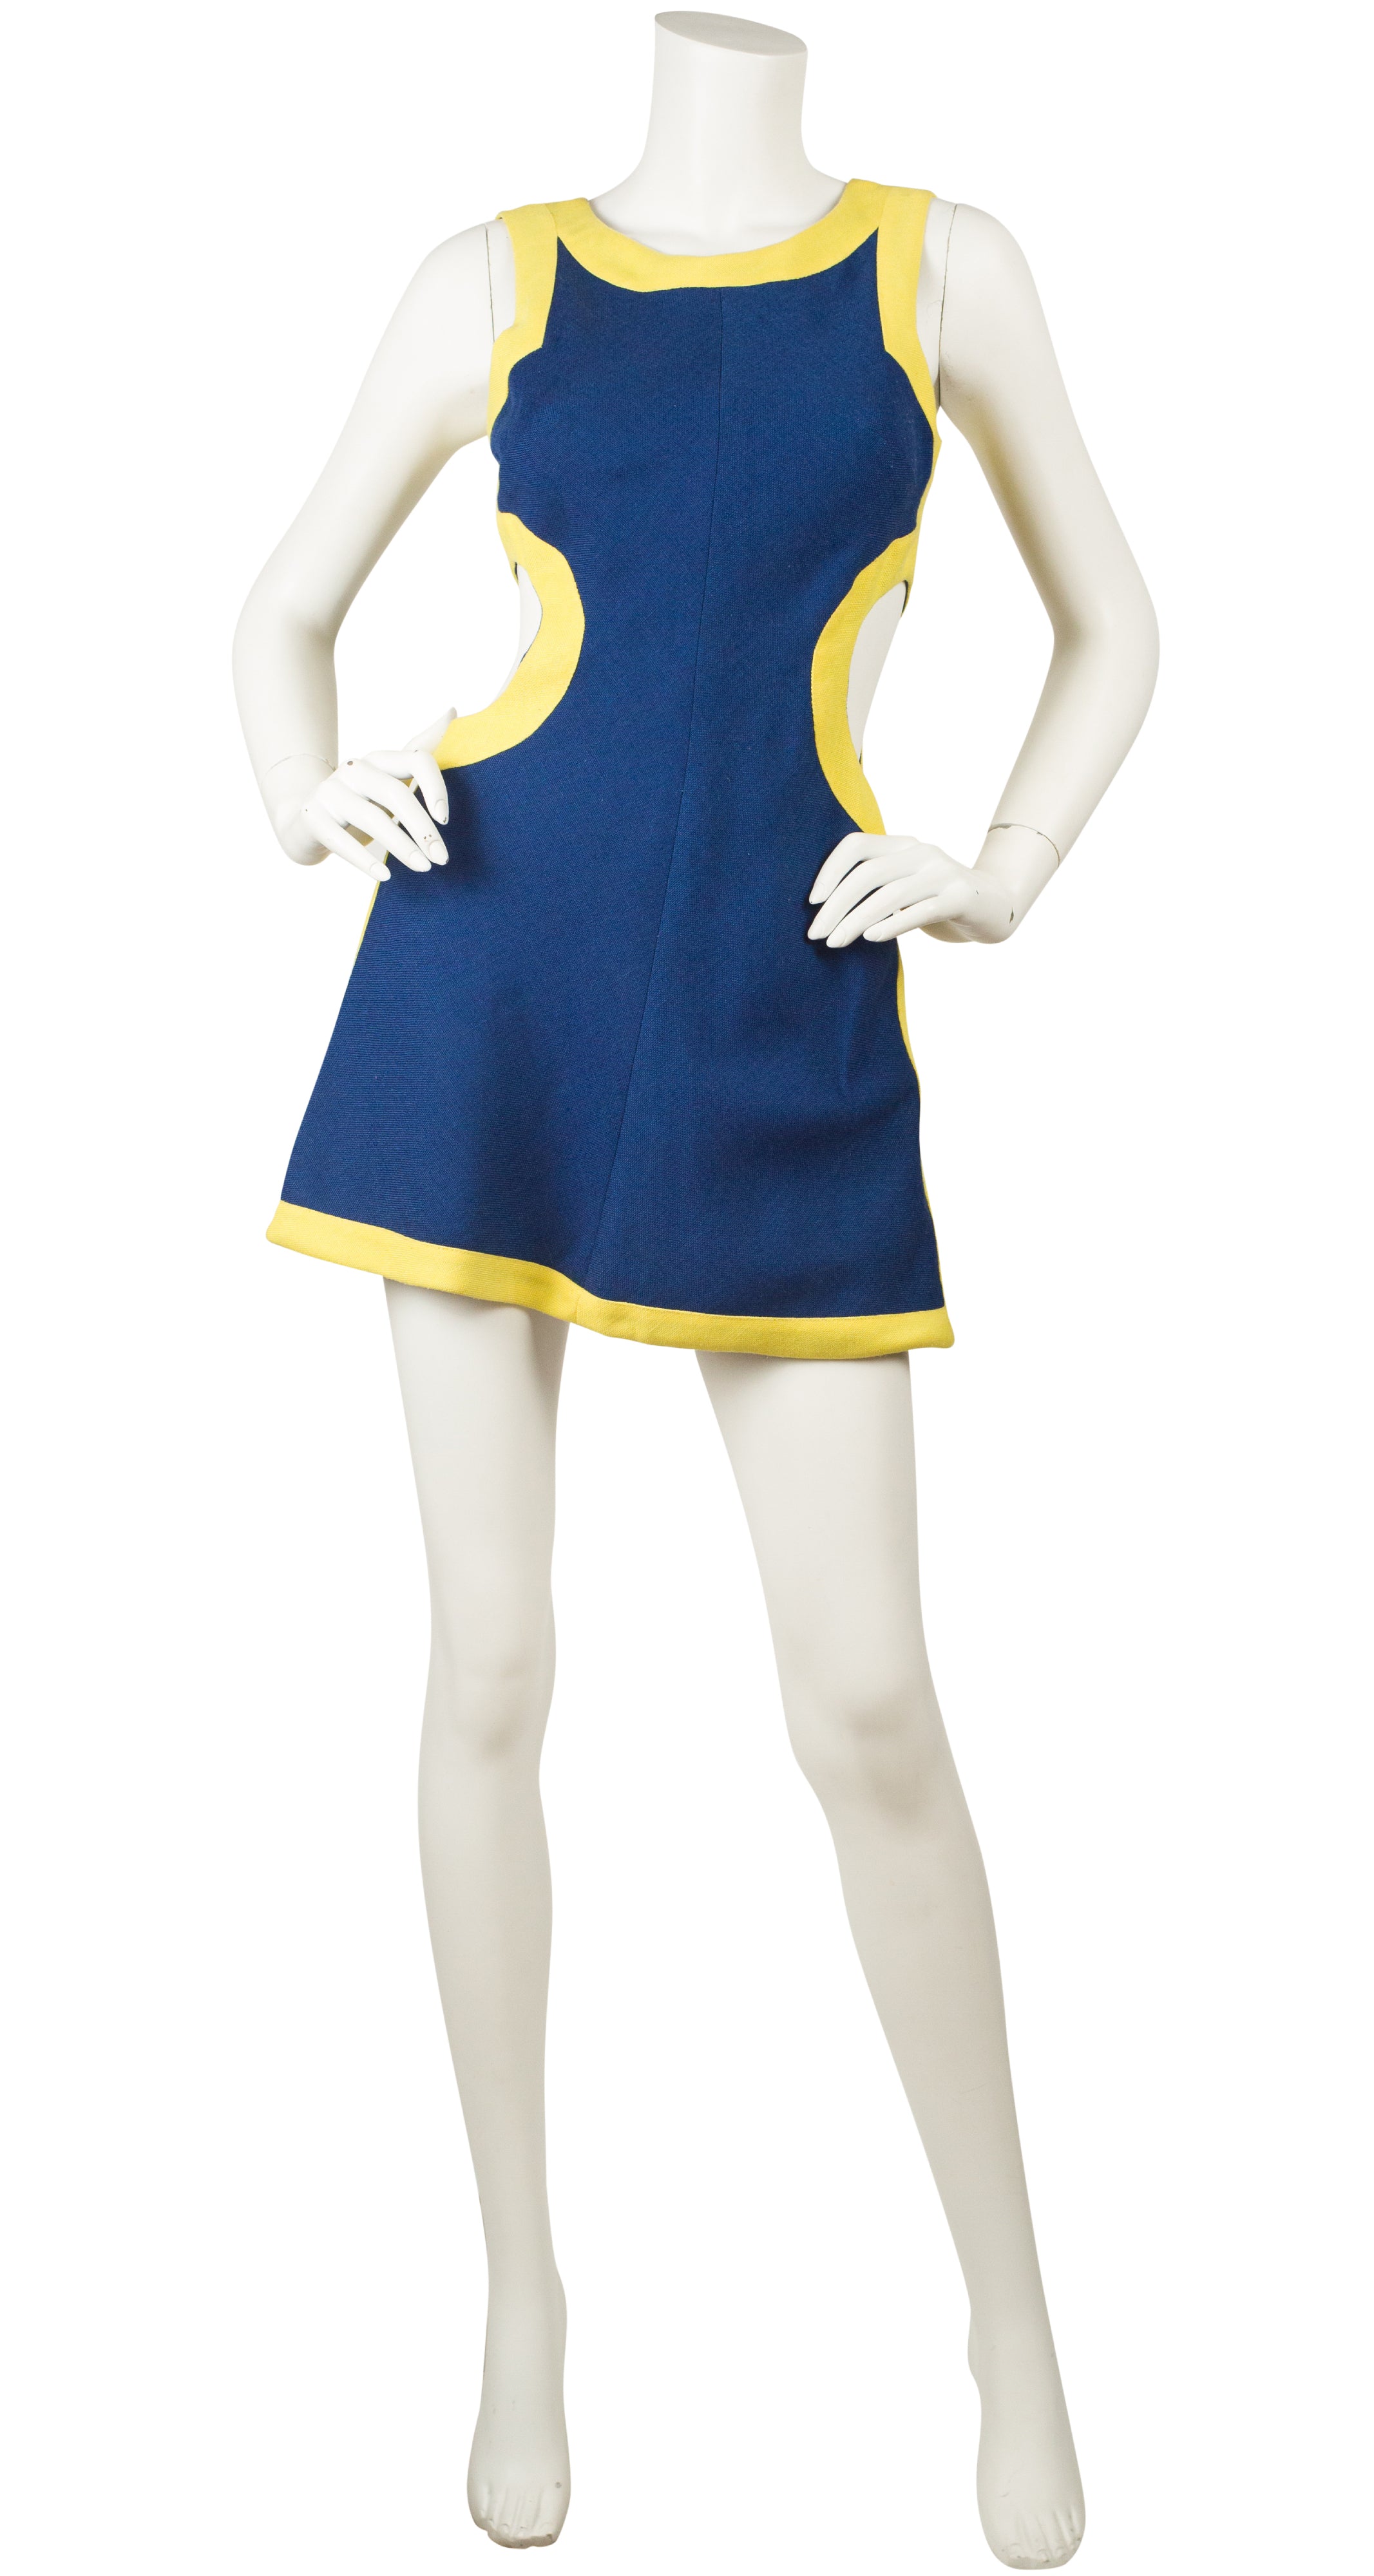 Mister Leonard 1960s Vintage Mod Blue & Yellow Cut-Out Mini Dress